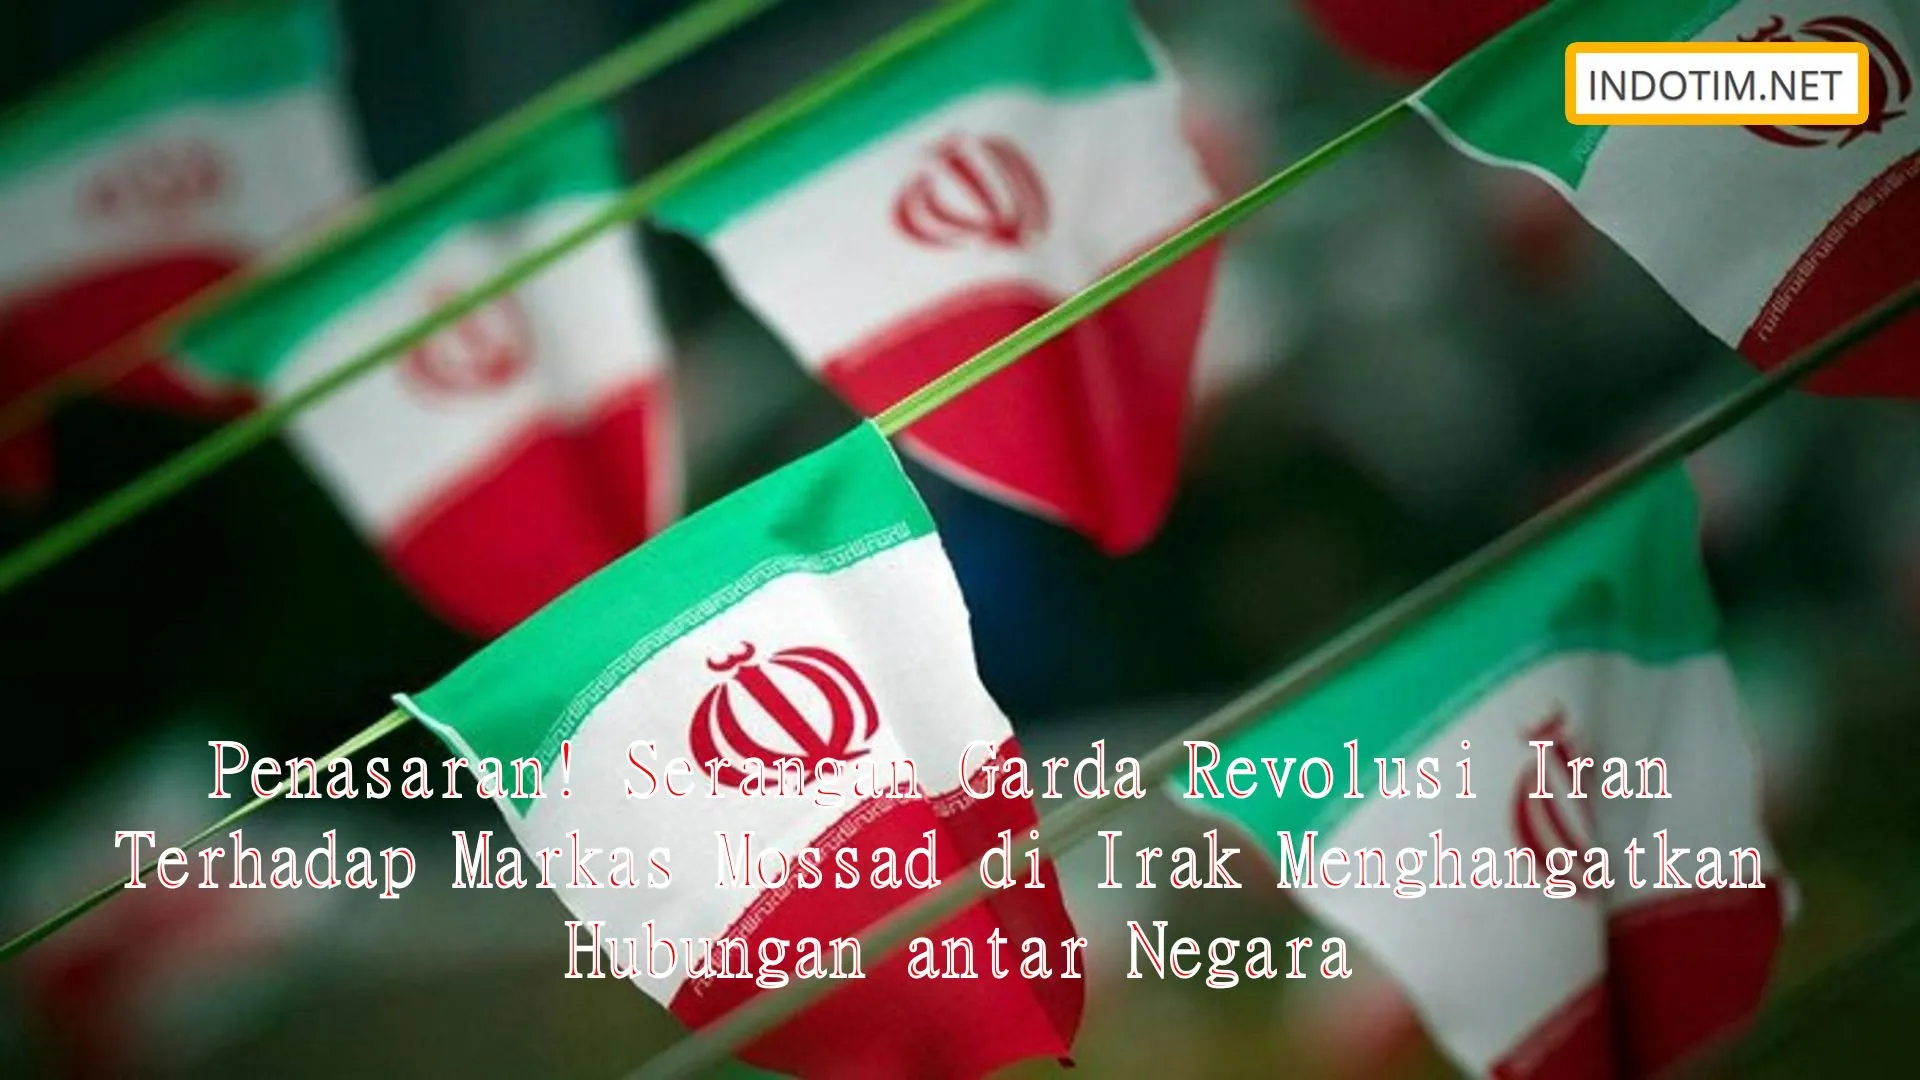 Penasaran! Serangan Garda Revolusi Iran Terhadap Markas Mossad di Irak Menghangatkan Hubungan antar Negara